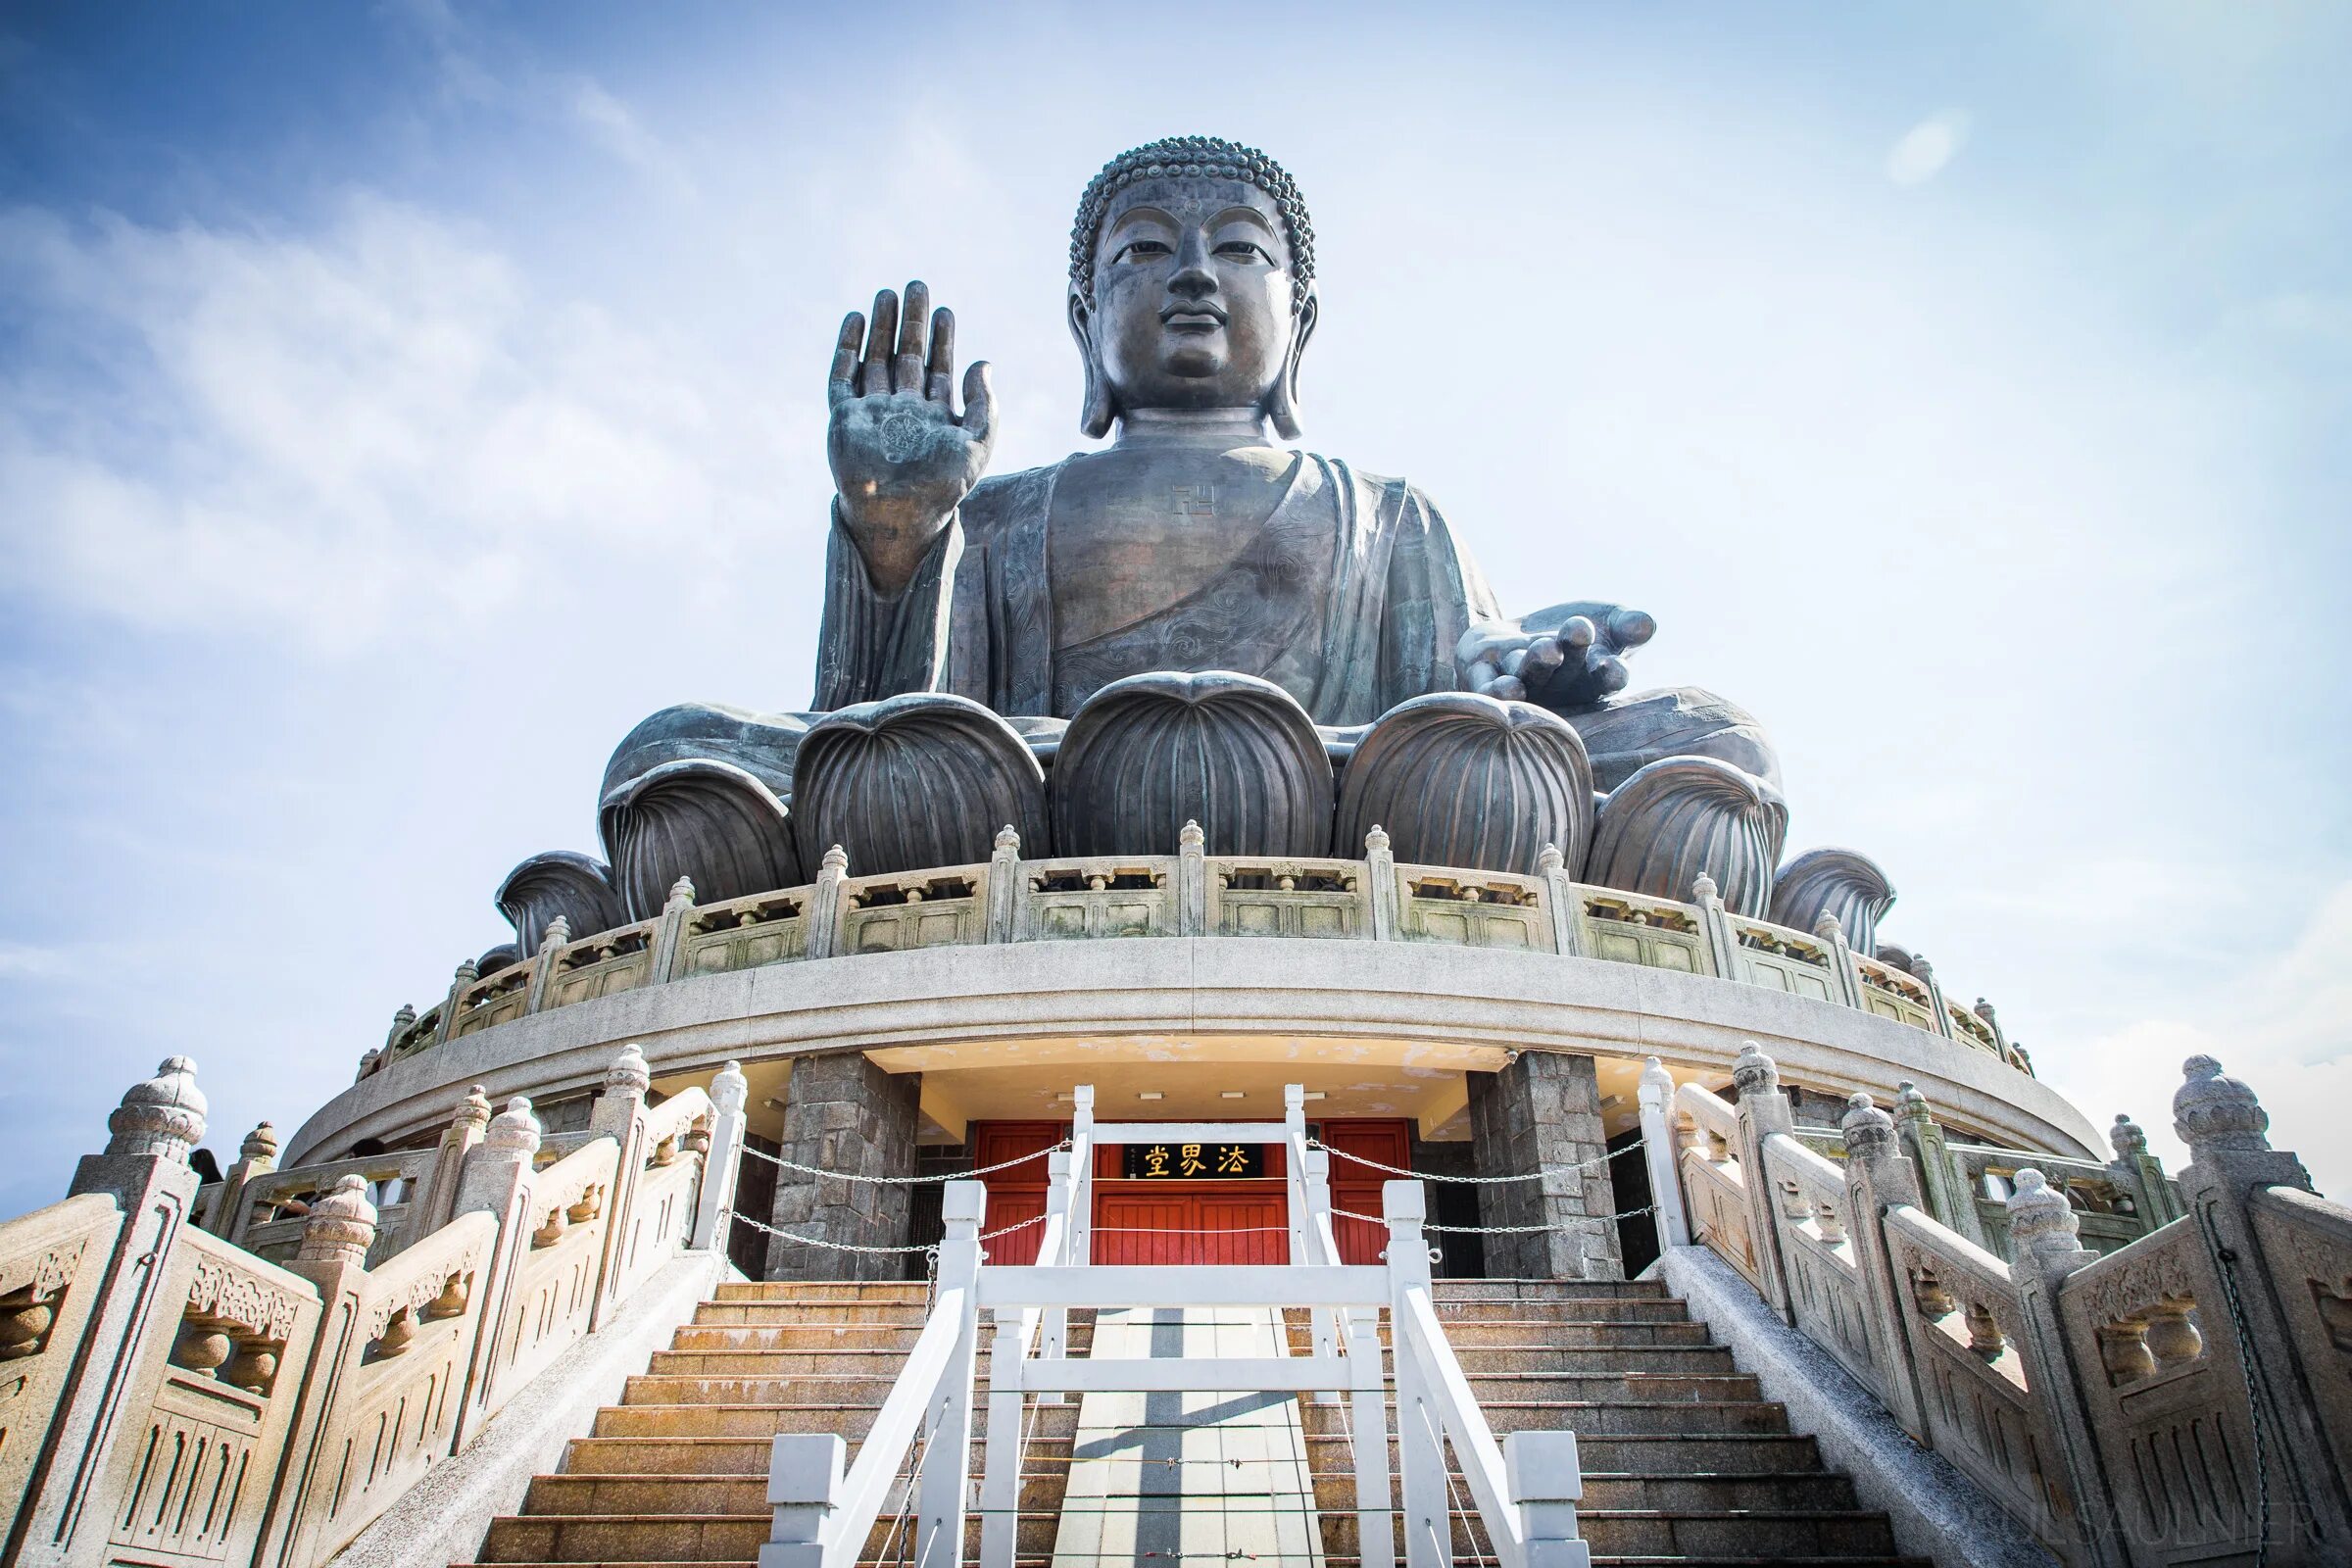 Будда на острове Лантау. Большой Будда Лантау Гонконг. Тяньтань Будда — остров Лантау, Гонконг. Статуя Будды Лантау.